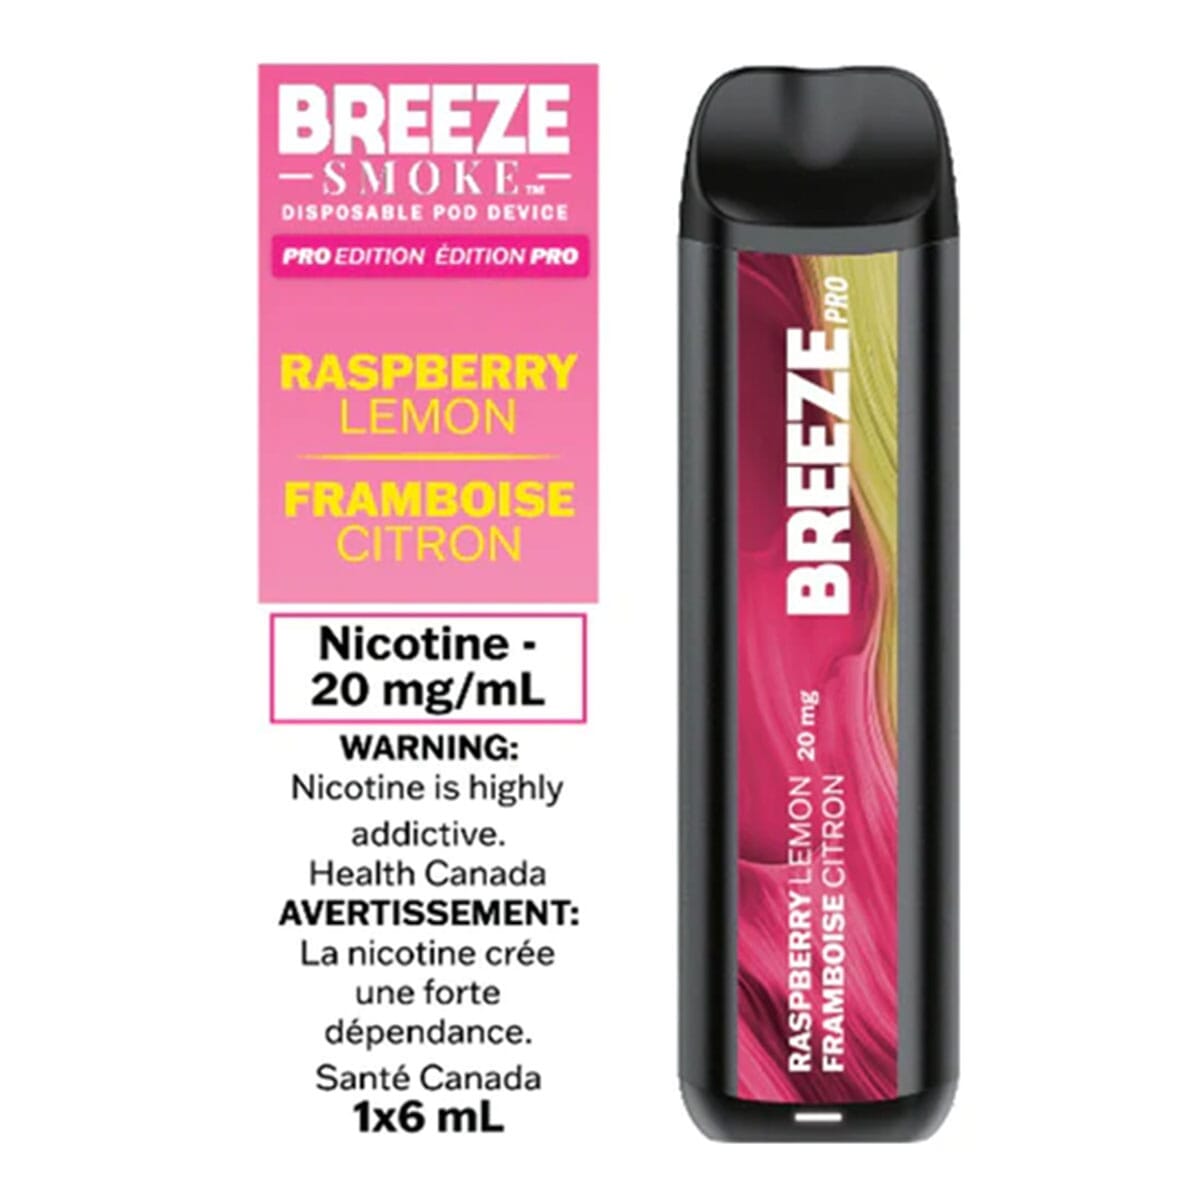 Breeze Pro Raspberry Lemon Disposable Vape Pen Disposable Breeze Smoke 20mg/mL 